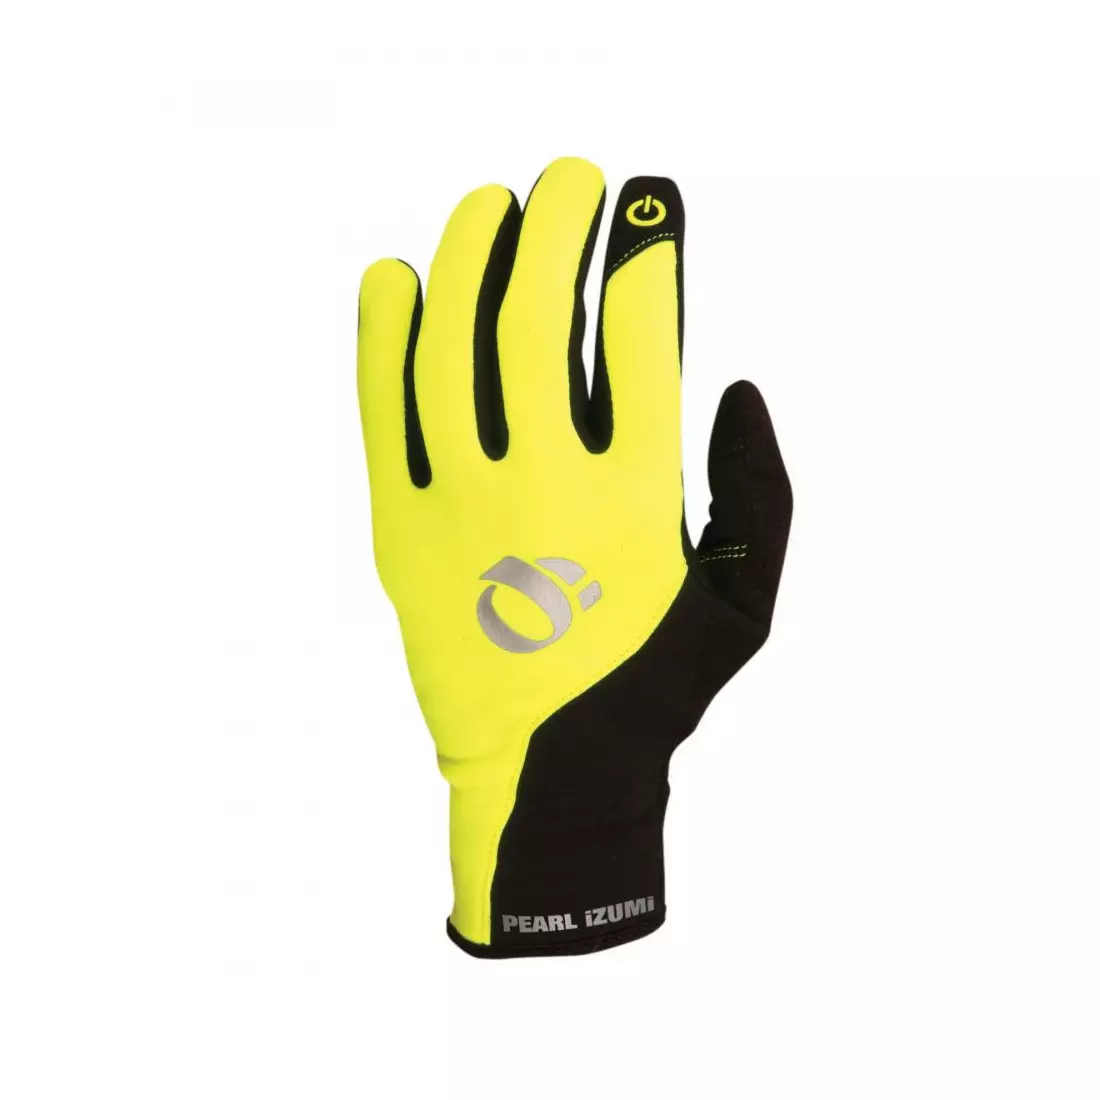 PEARL IZUMI CONDUCTIVE insulated gloves 14141311-428